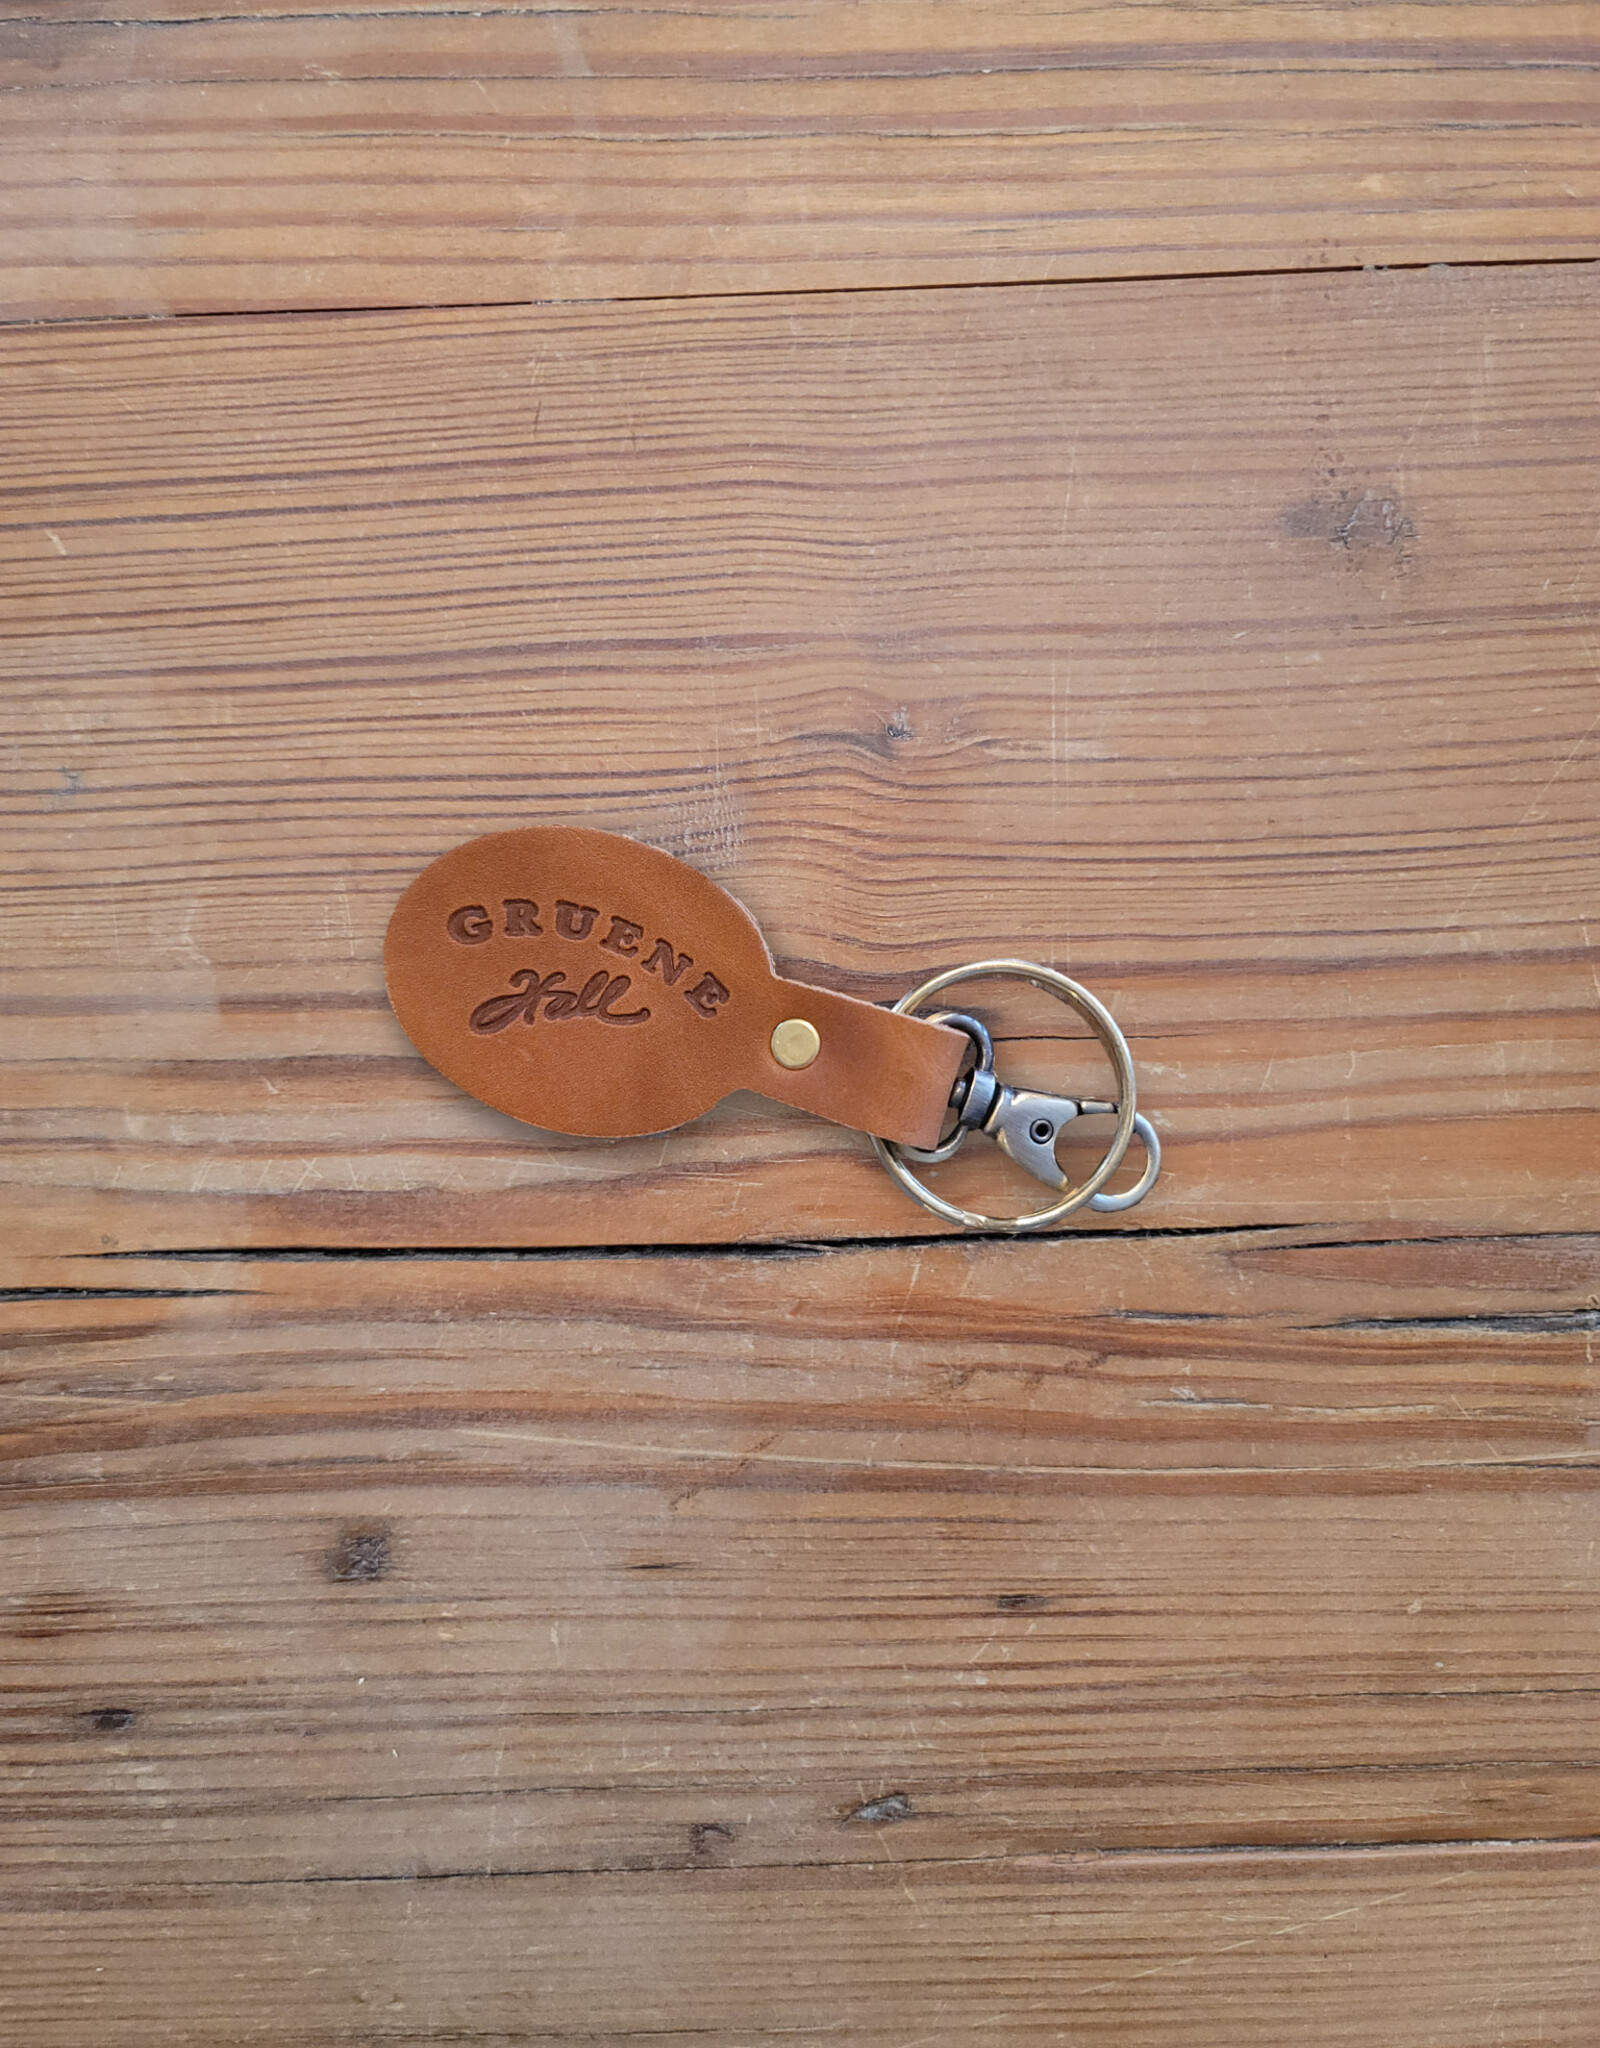 Gruene Hall Leather Clasp Keychain by Oowee